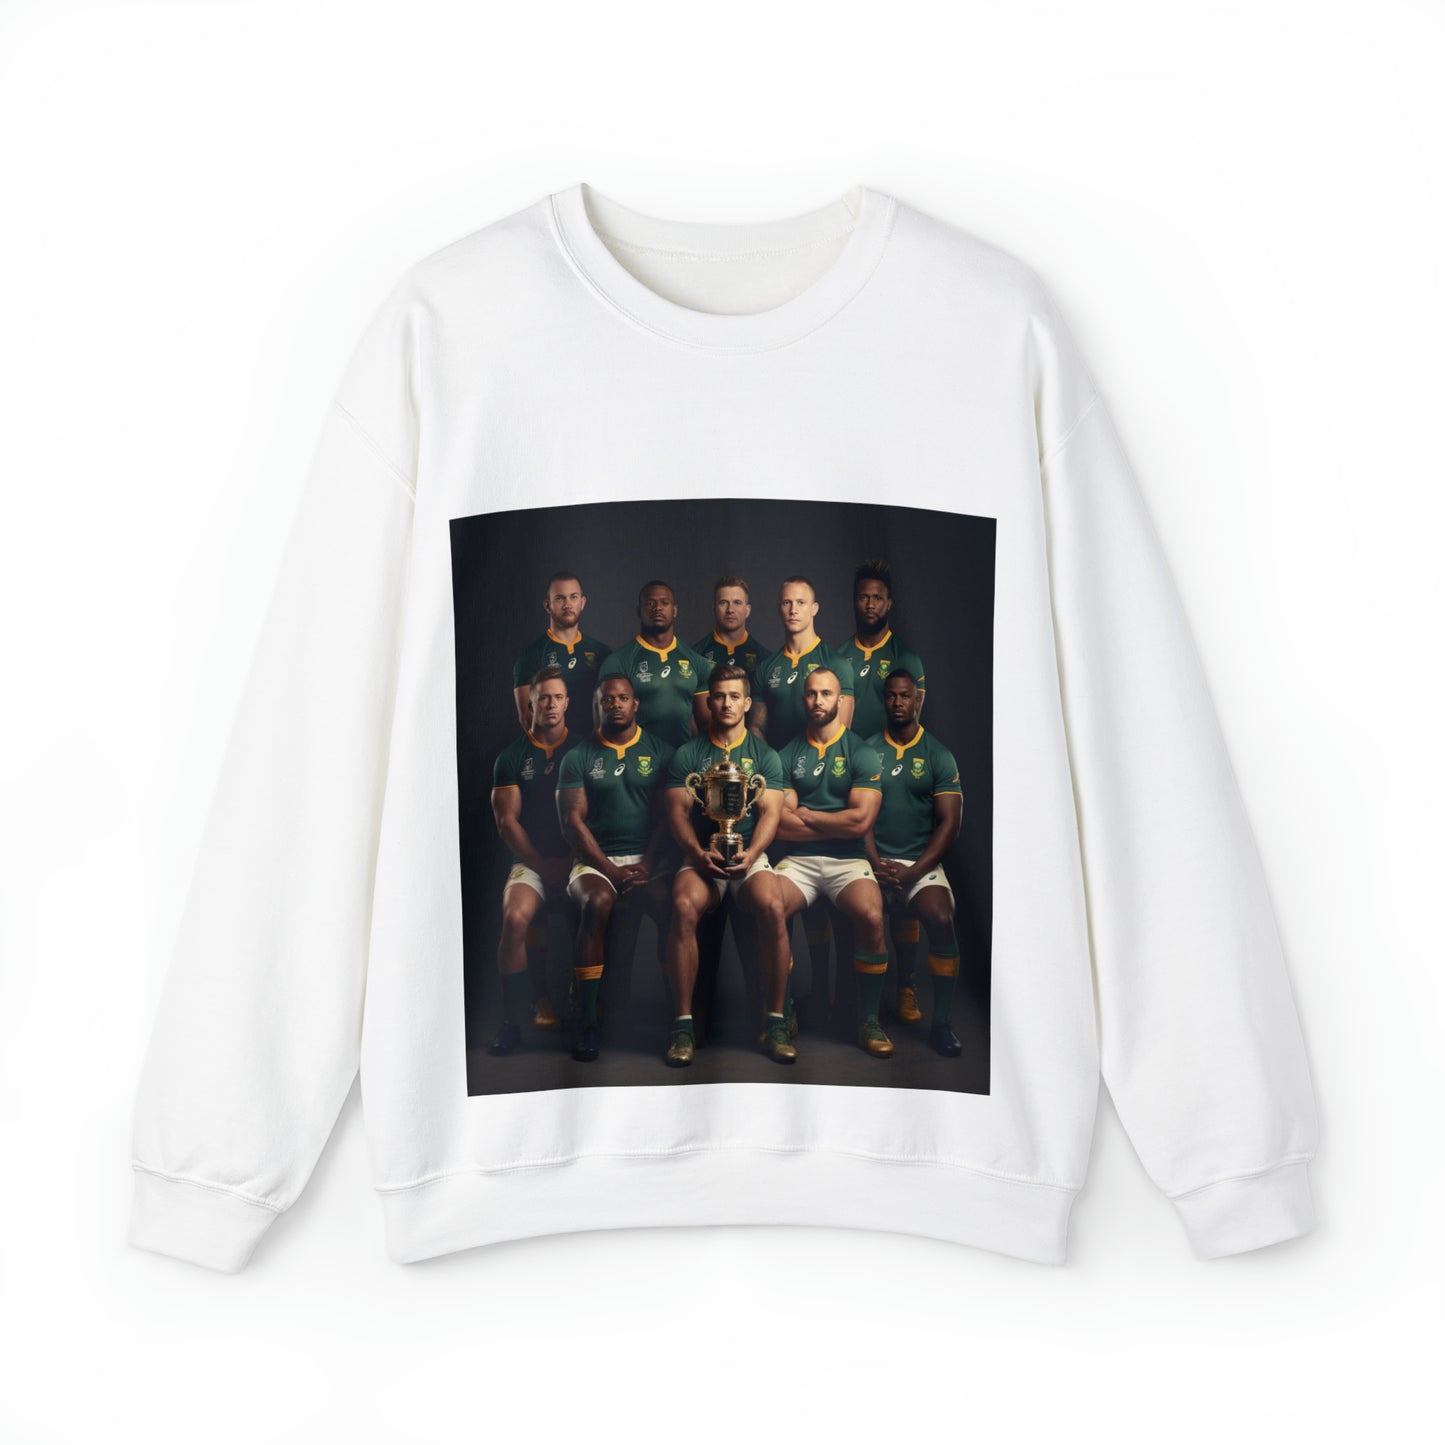 Springbok RWC photoshoot - light sweatshirts